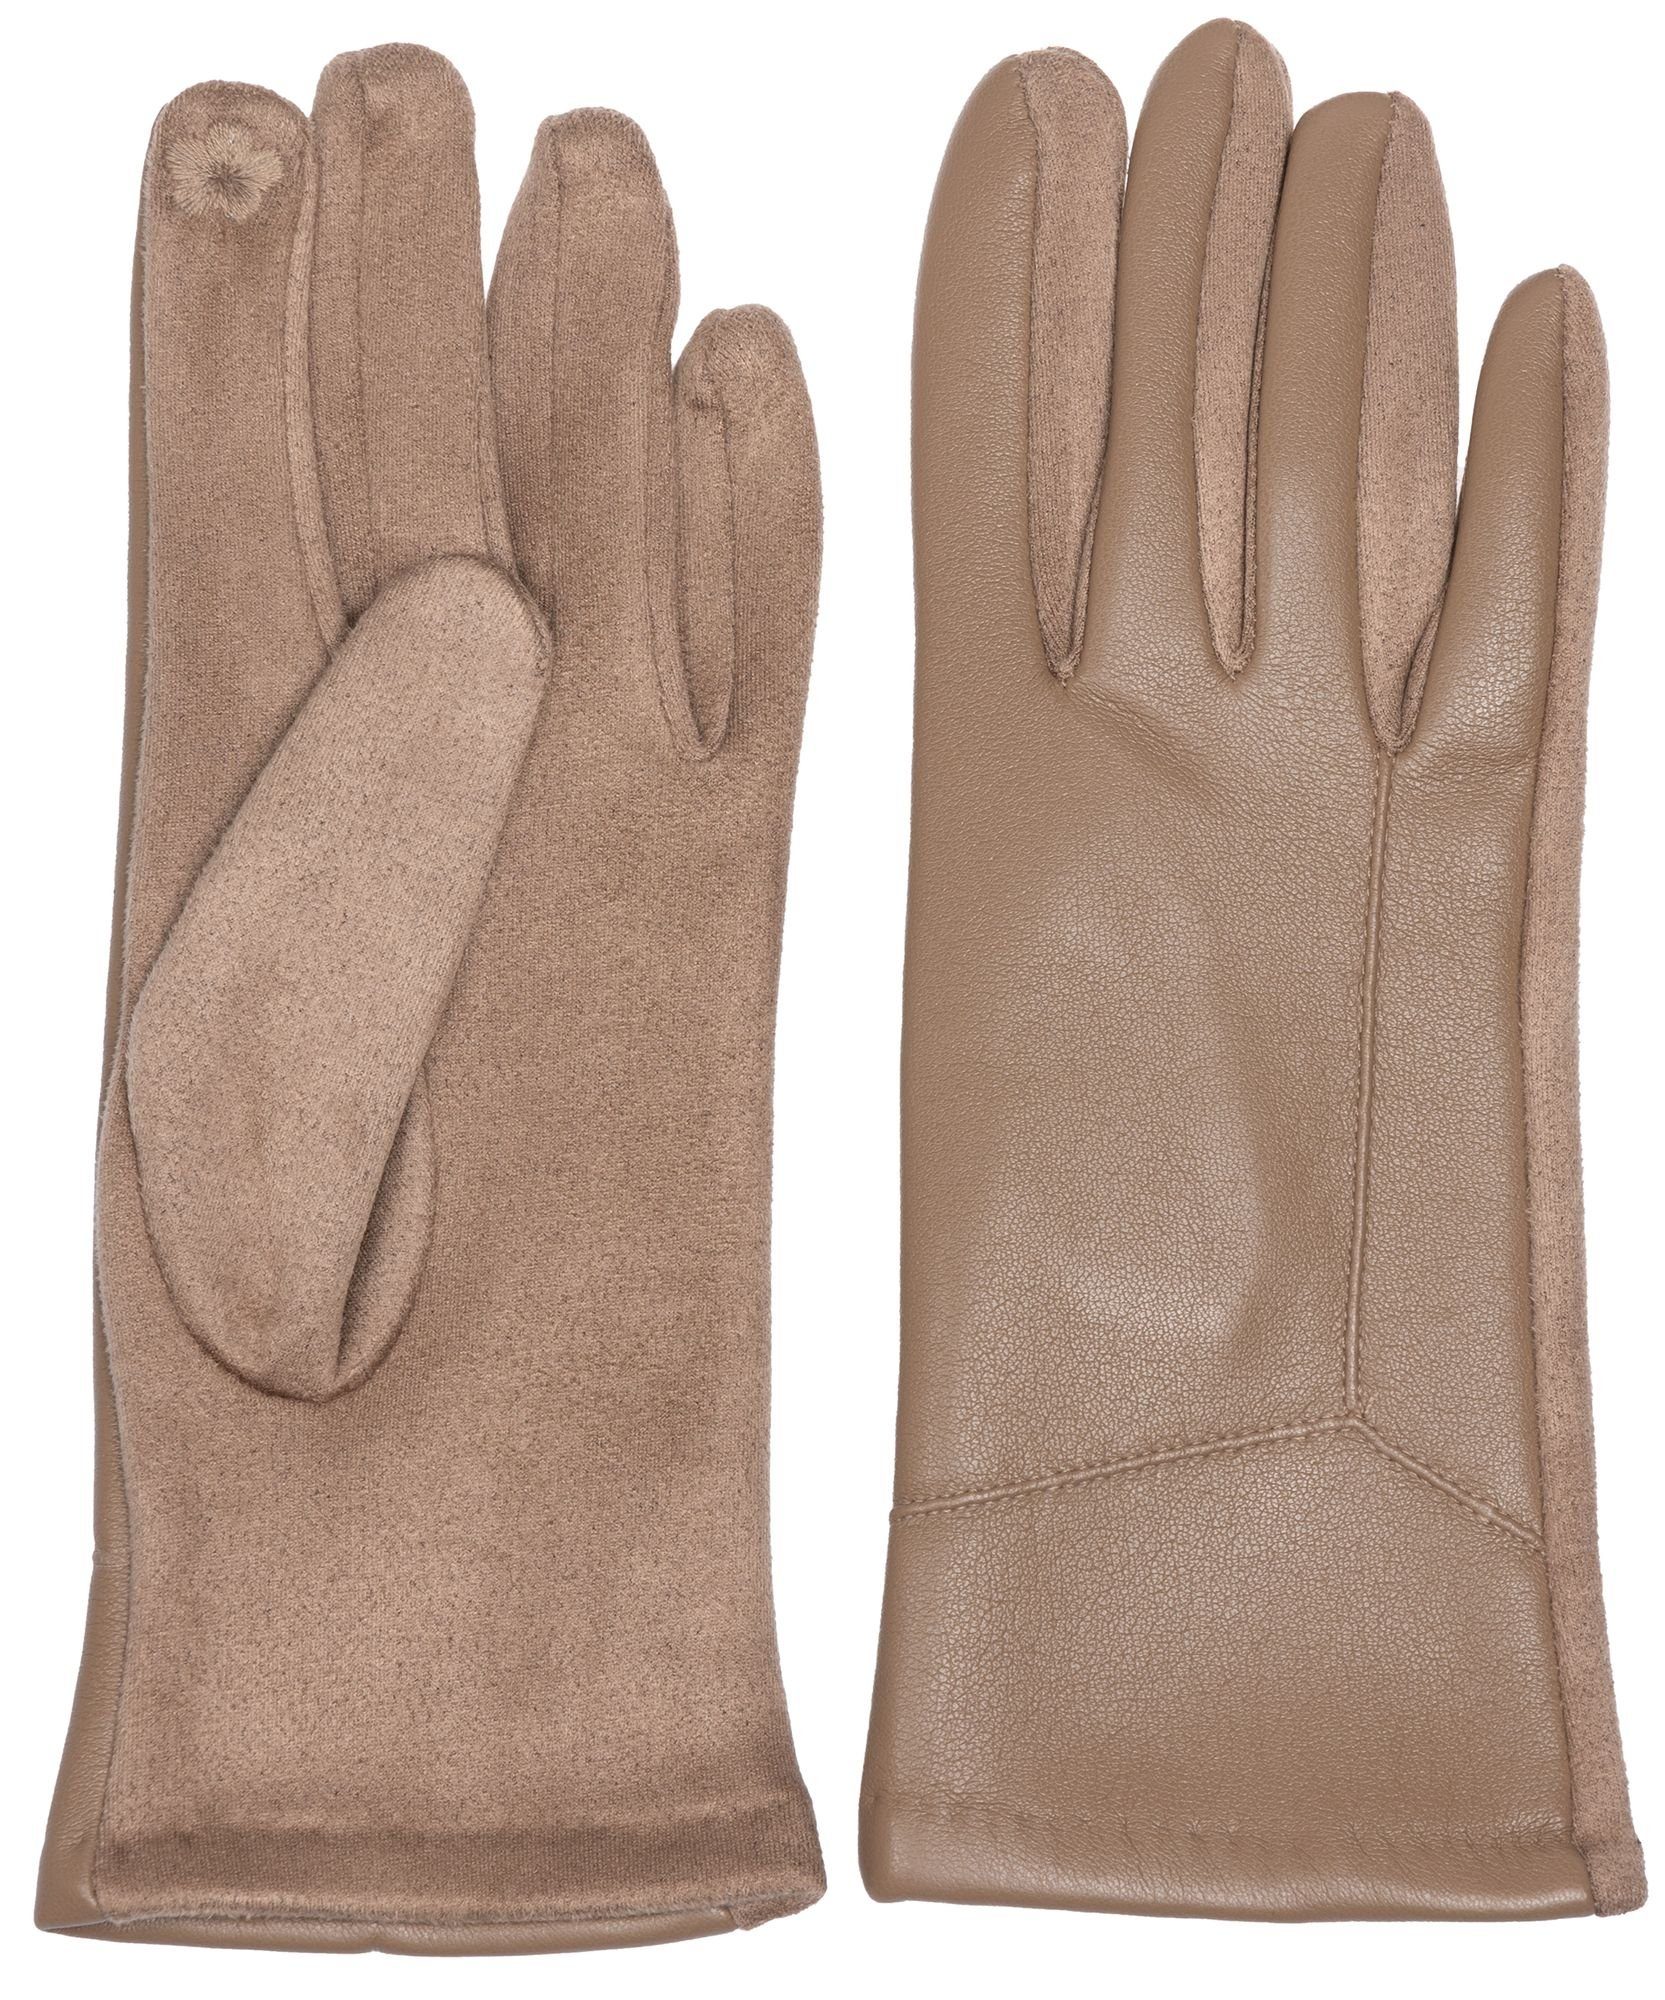 Caspar Strickhandschuhe GLV015 klassisch elegante uni Damen Handschuhe taupe